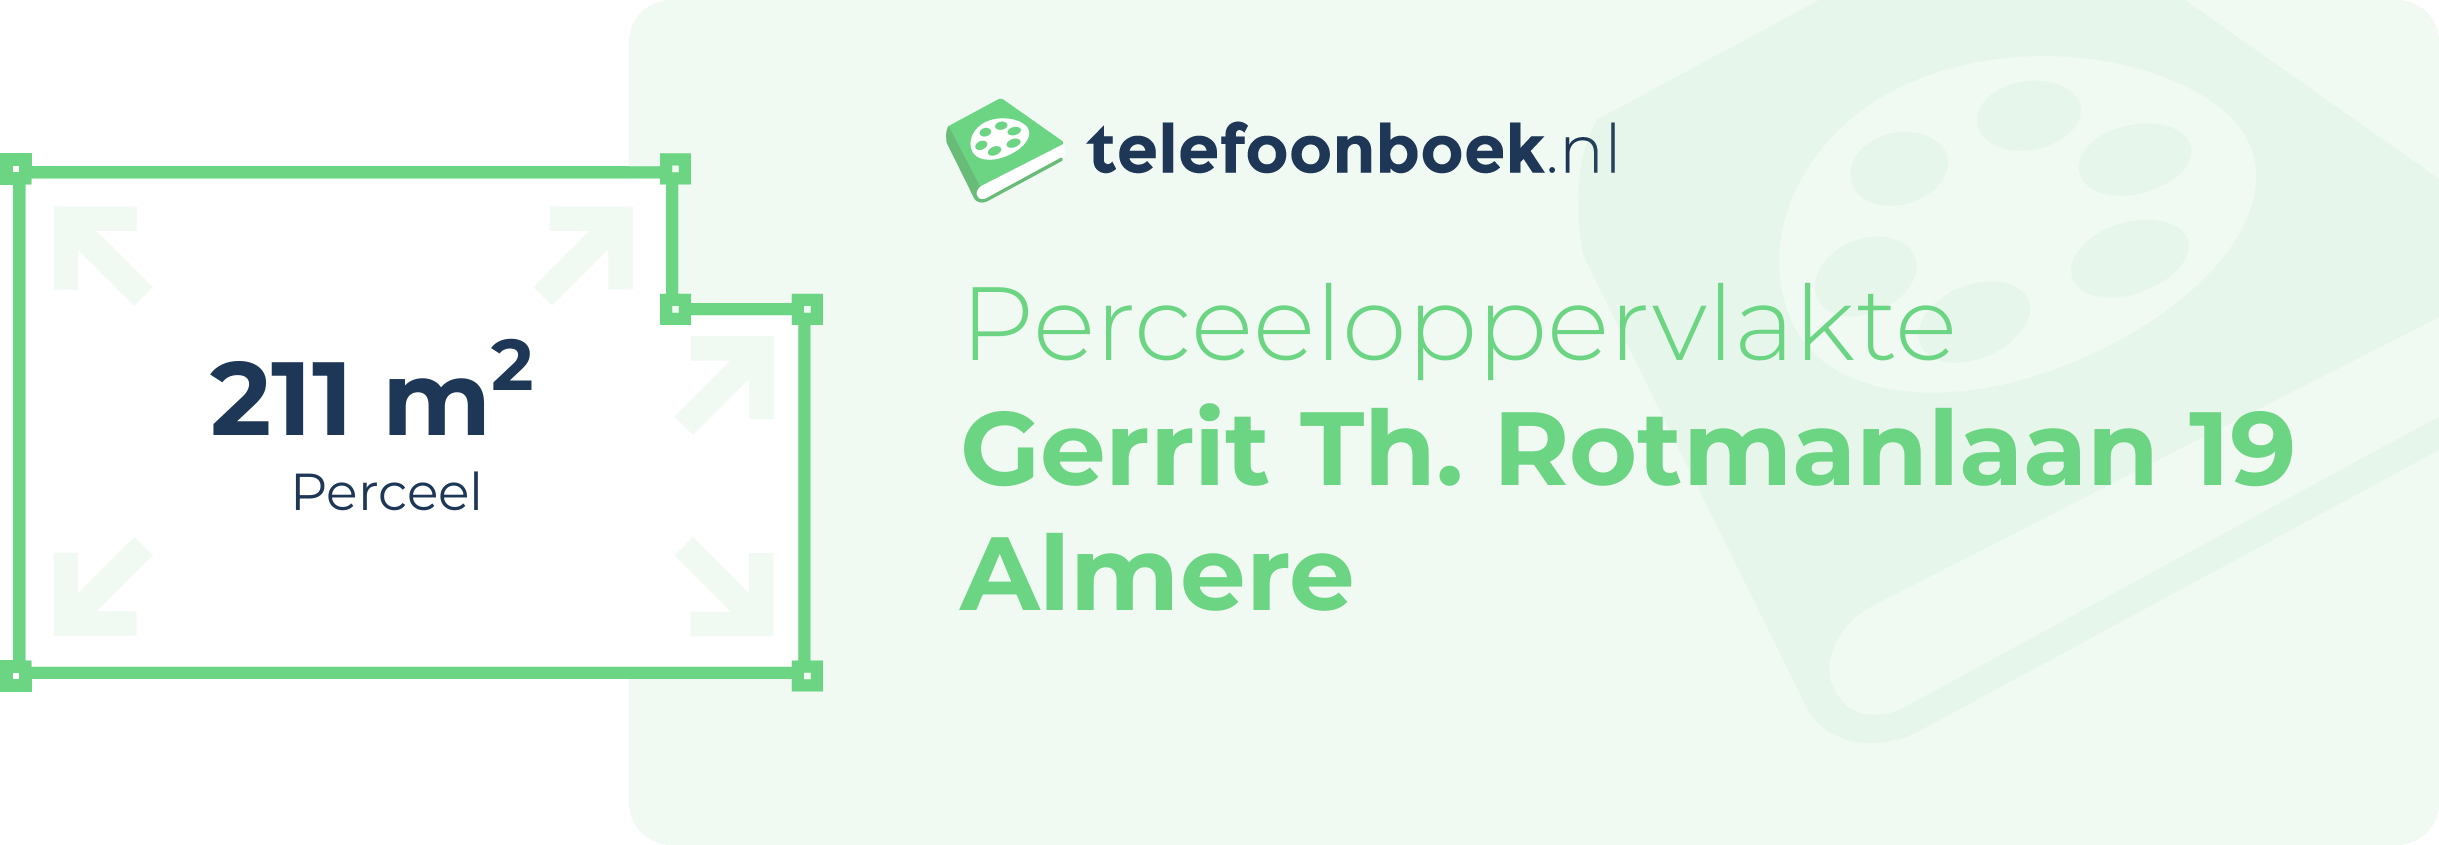 Perceeloppervlakte Gerrit Th. Rotmanlaan 19 Almere